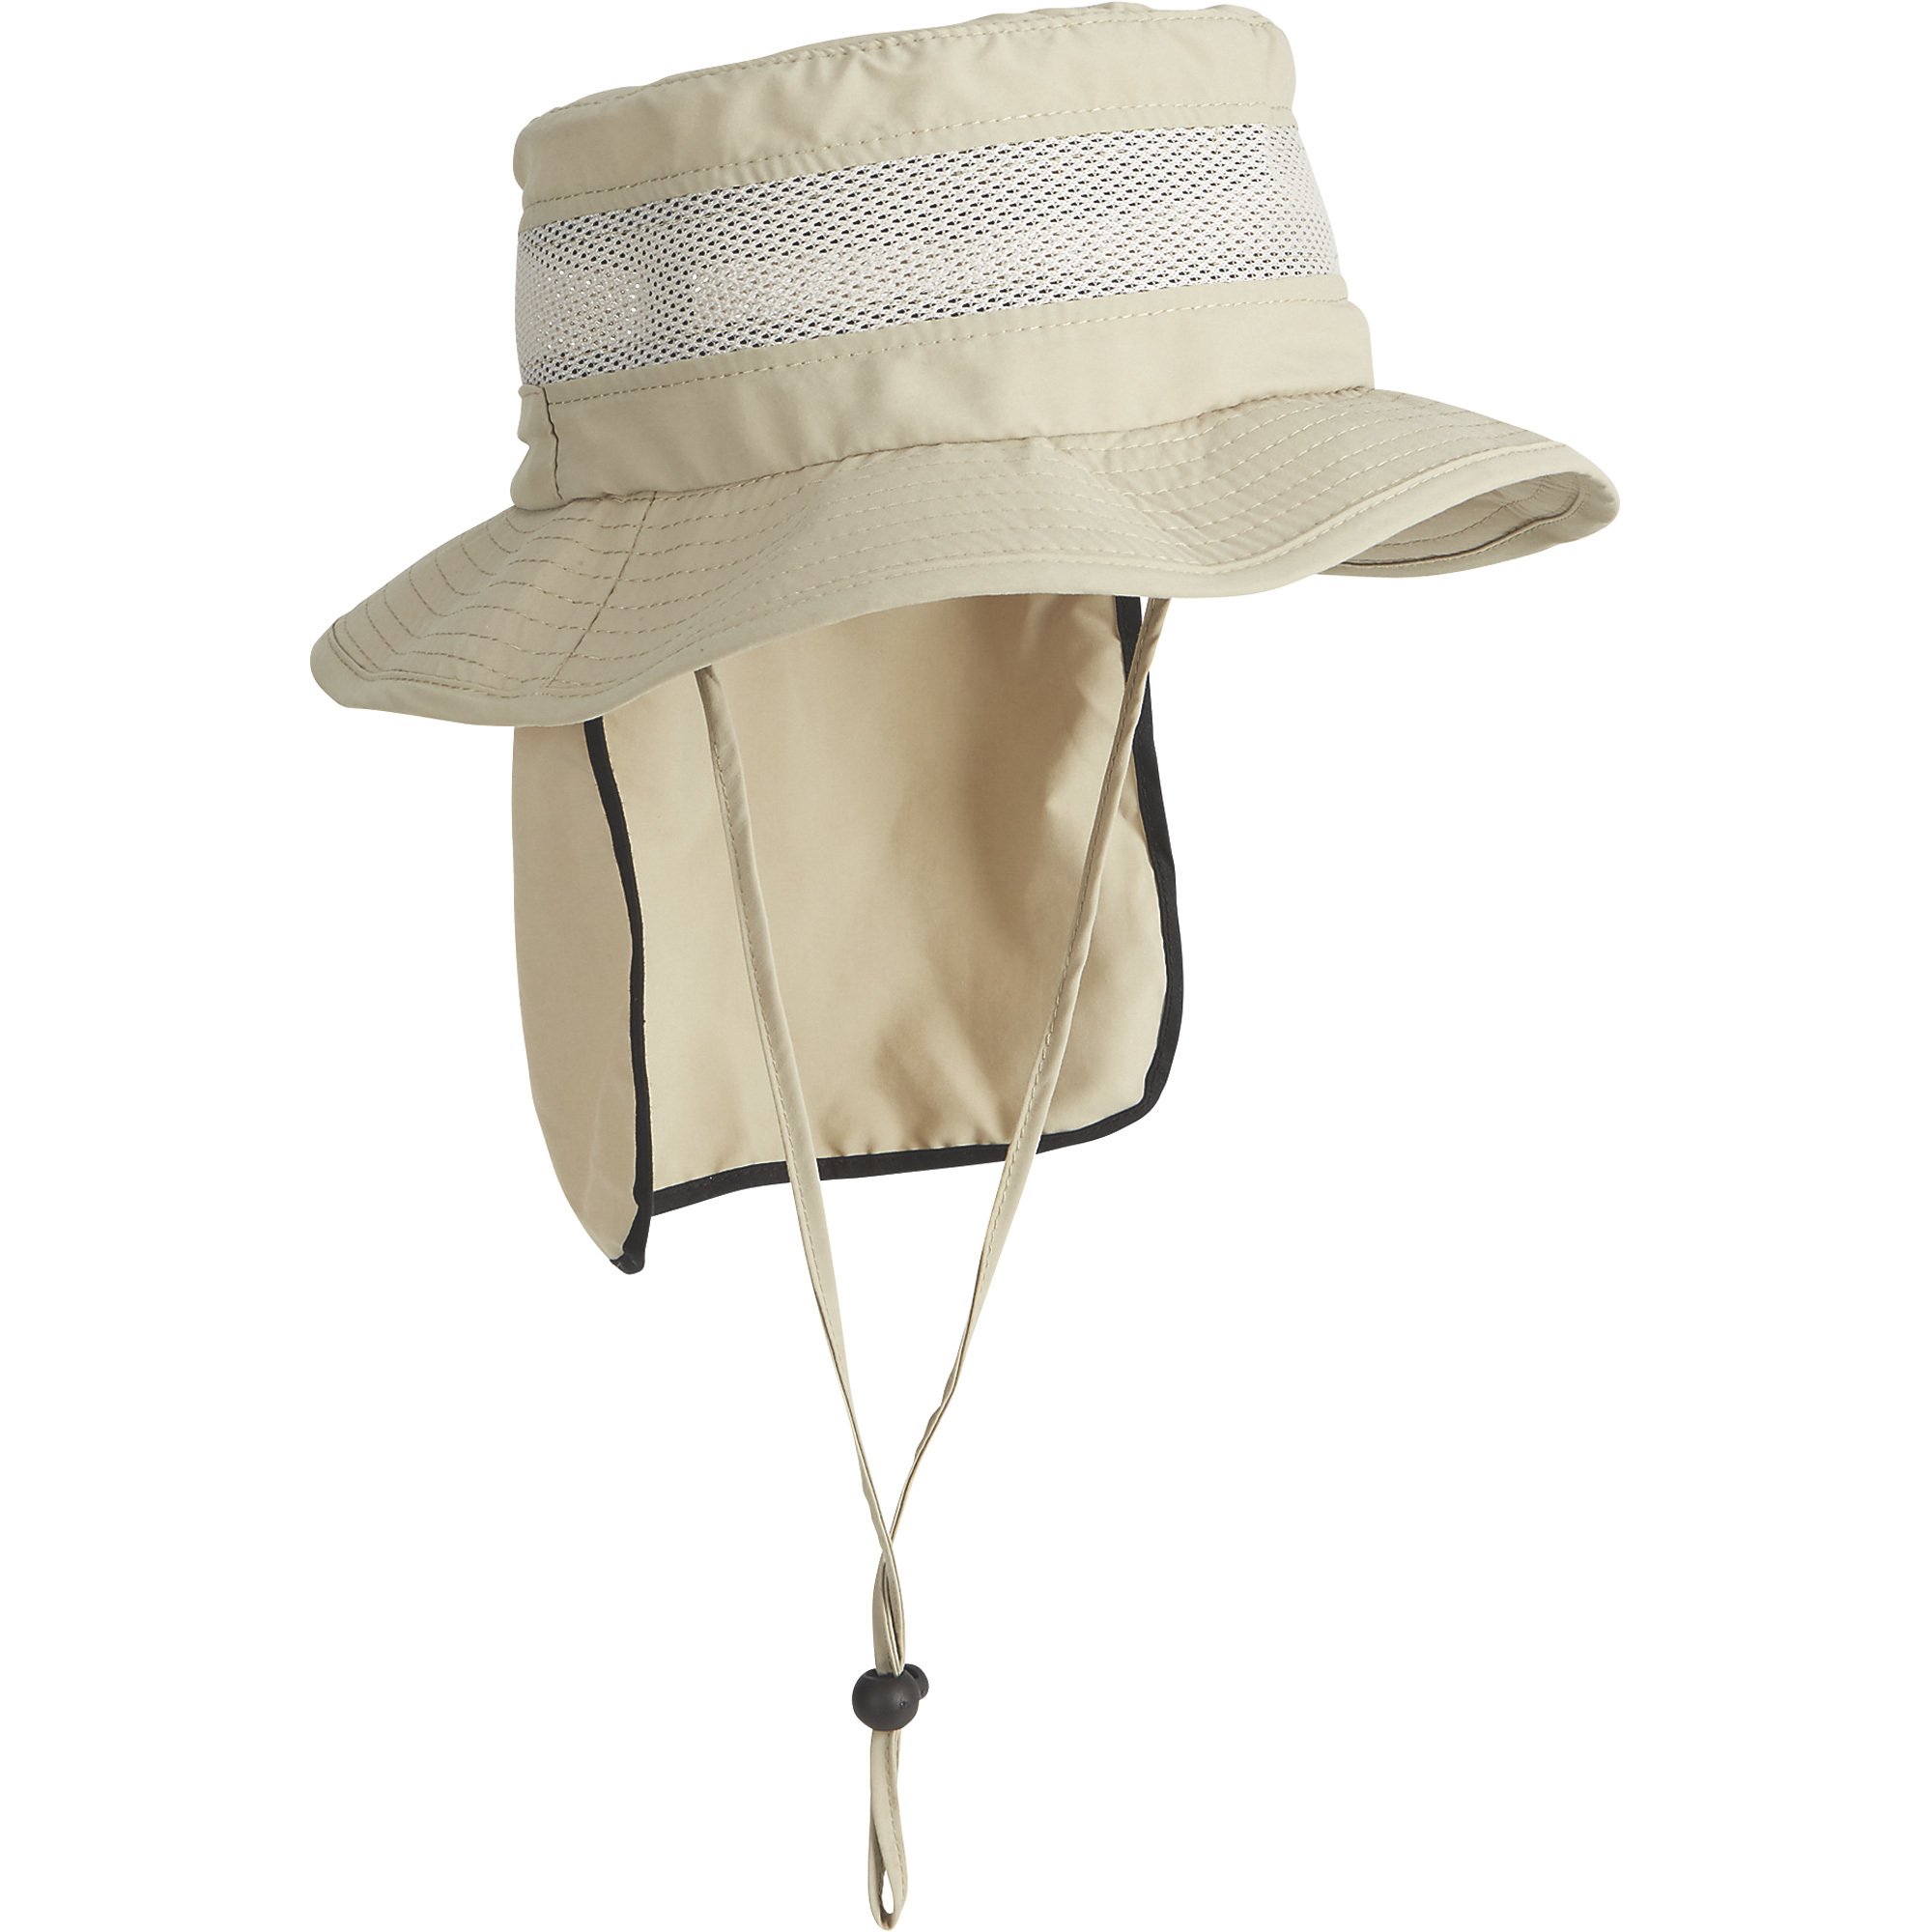 Stetson Boonie Hat with Neck Flap — Khaki, XL, Model# DHC199-KAKI4